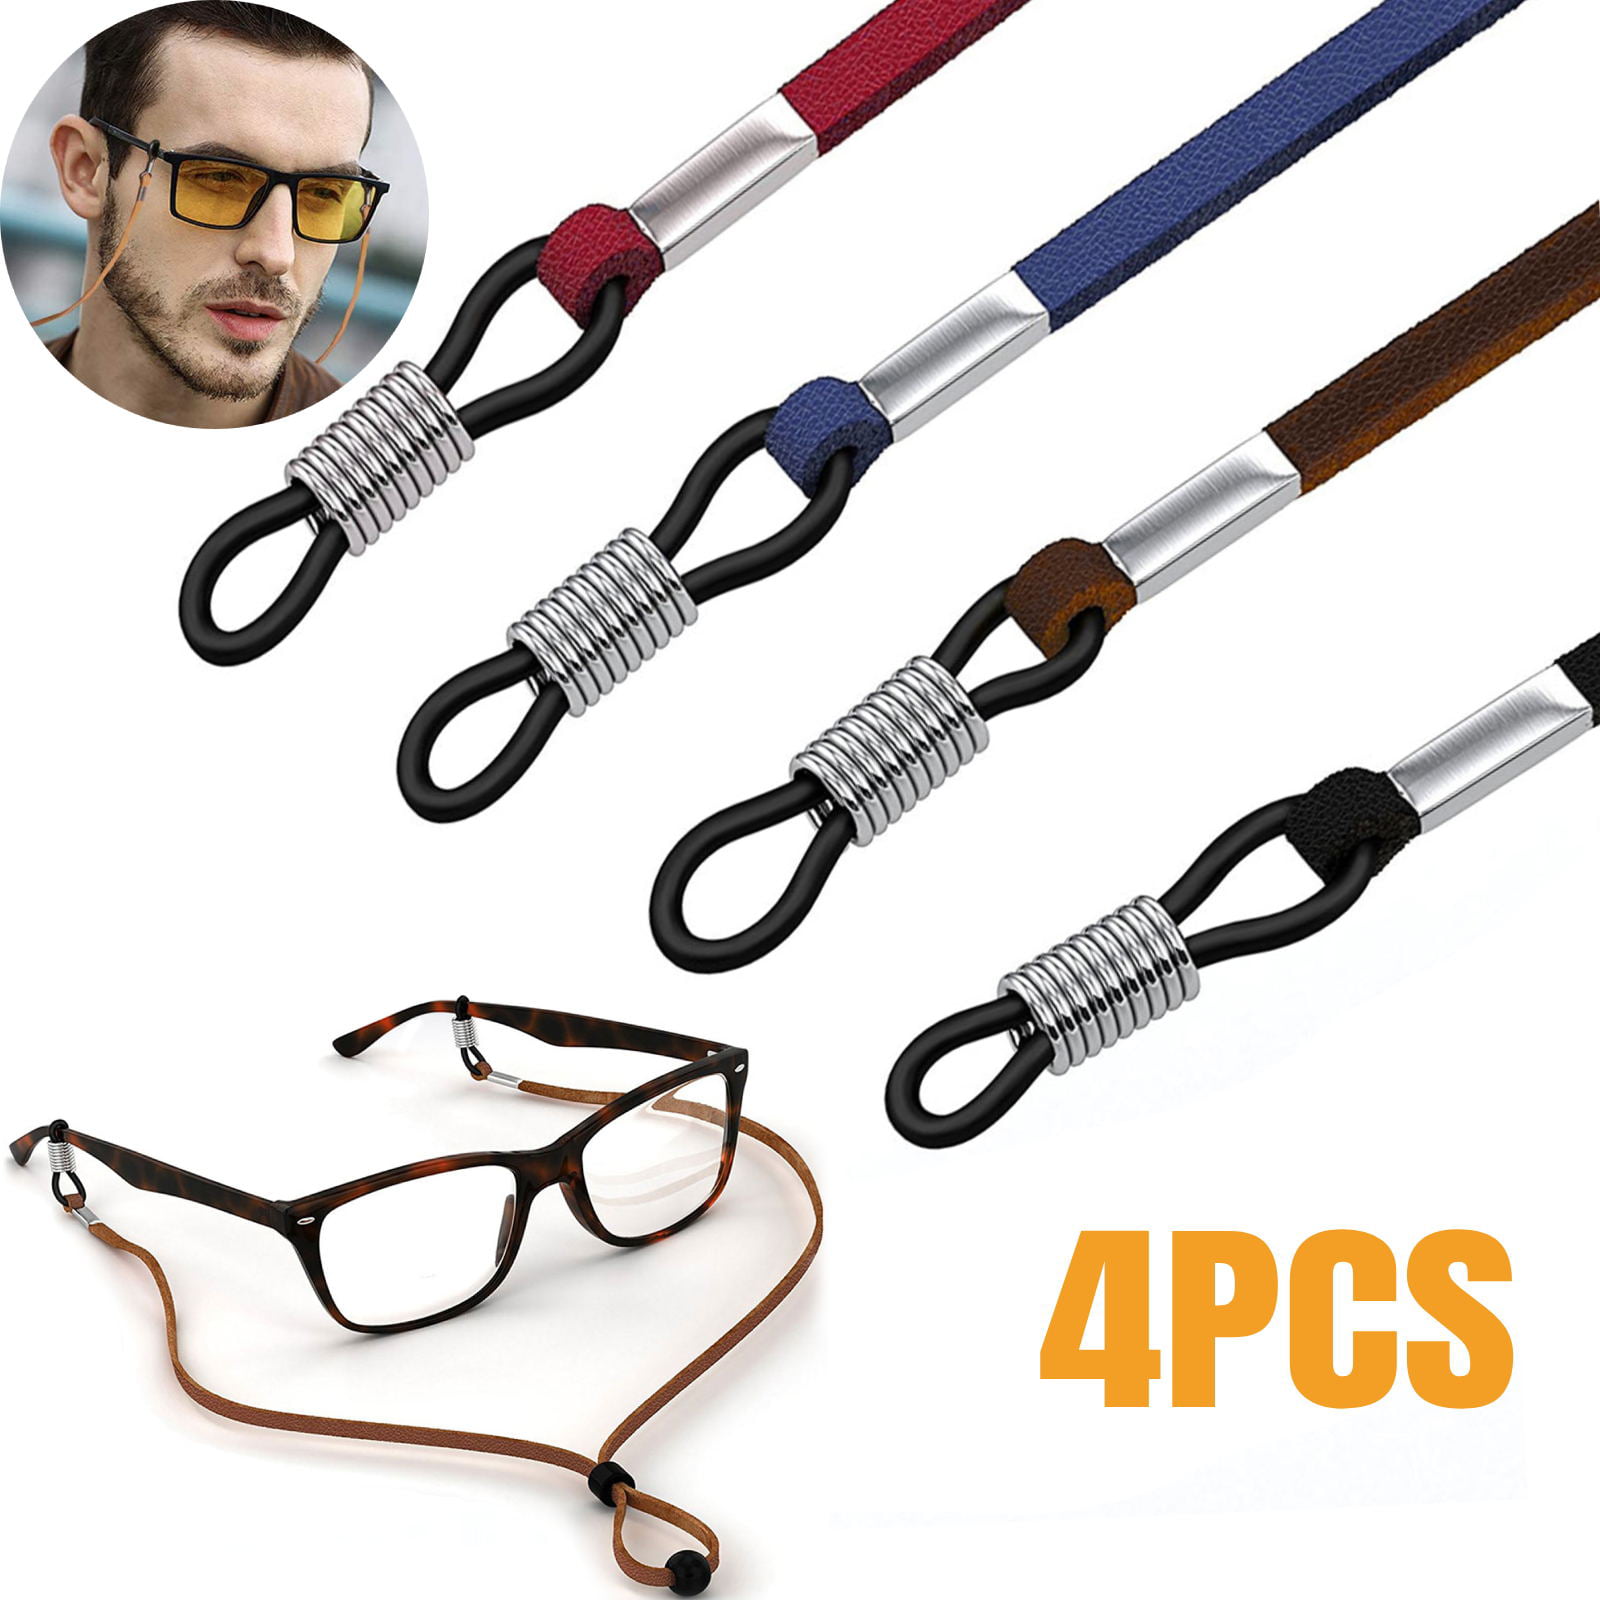 10 Pcs Kids Silicone Eyeglass Strap Anti-Slip Eyewear Retainer Cord Holder for Glasses Sunglasses Pink + White 